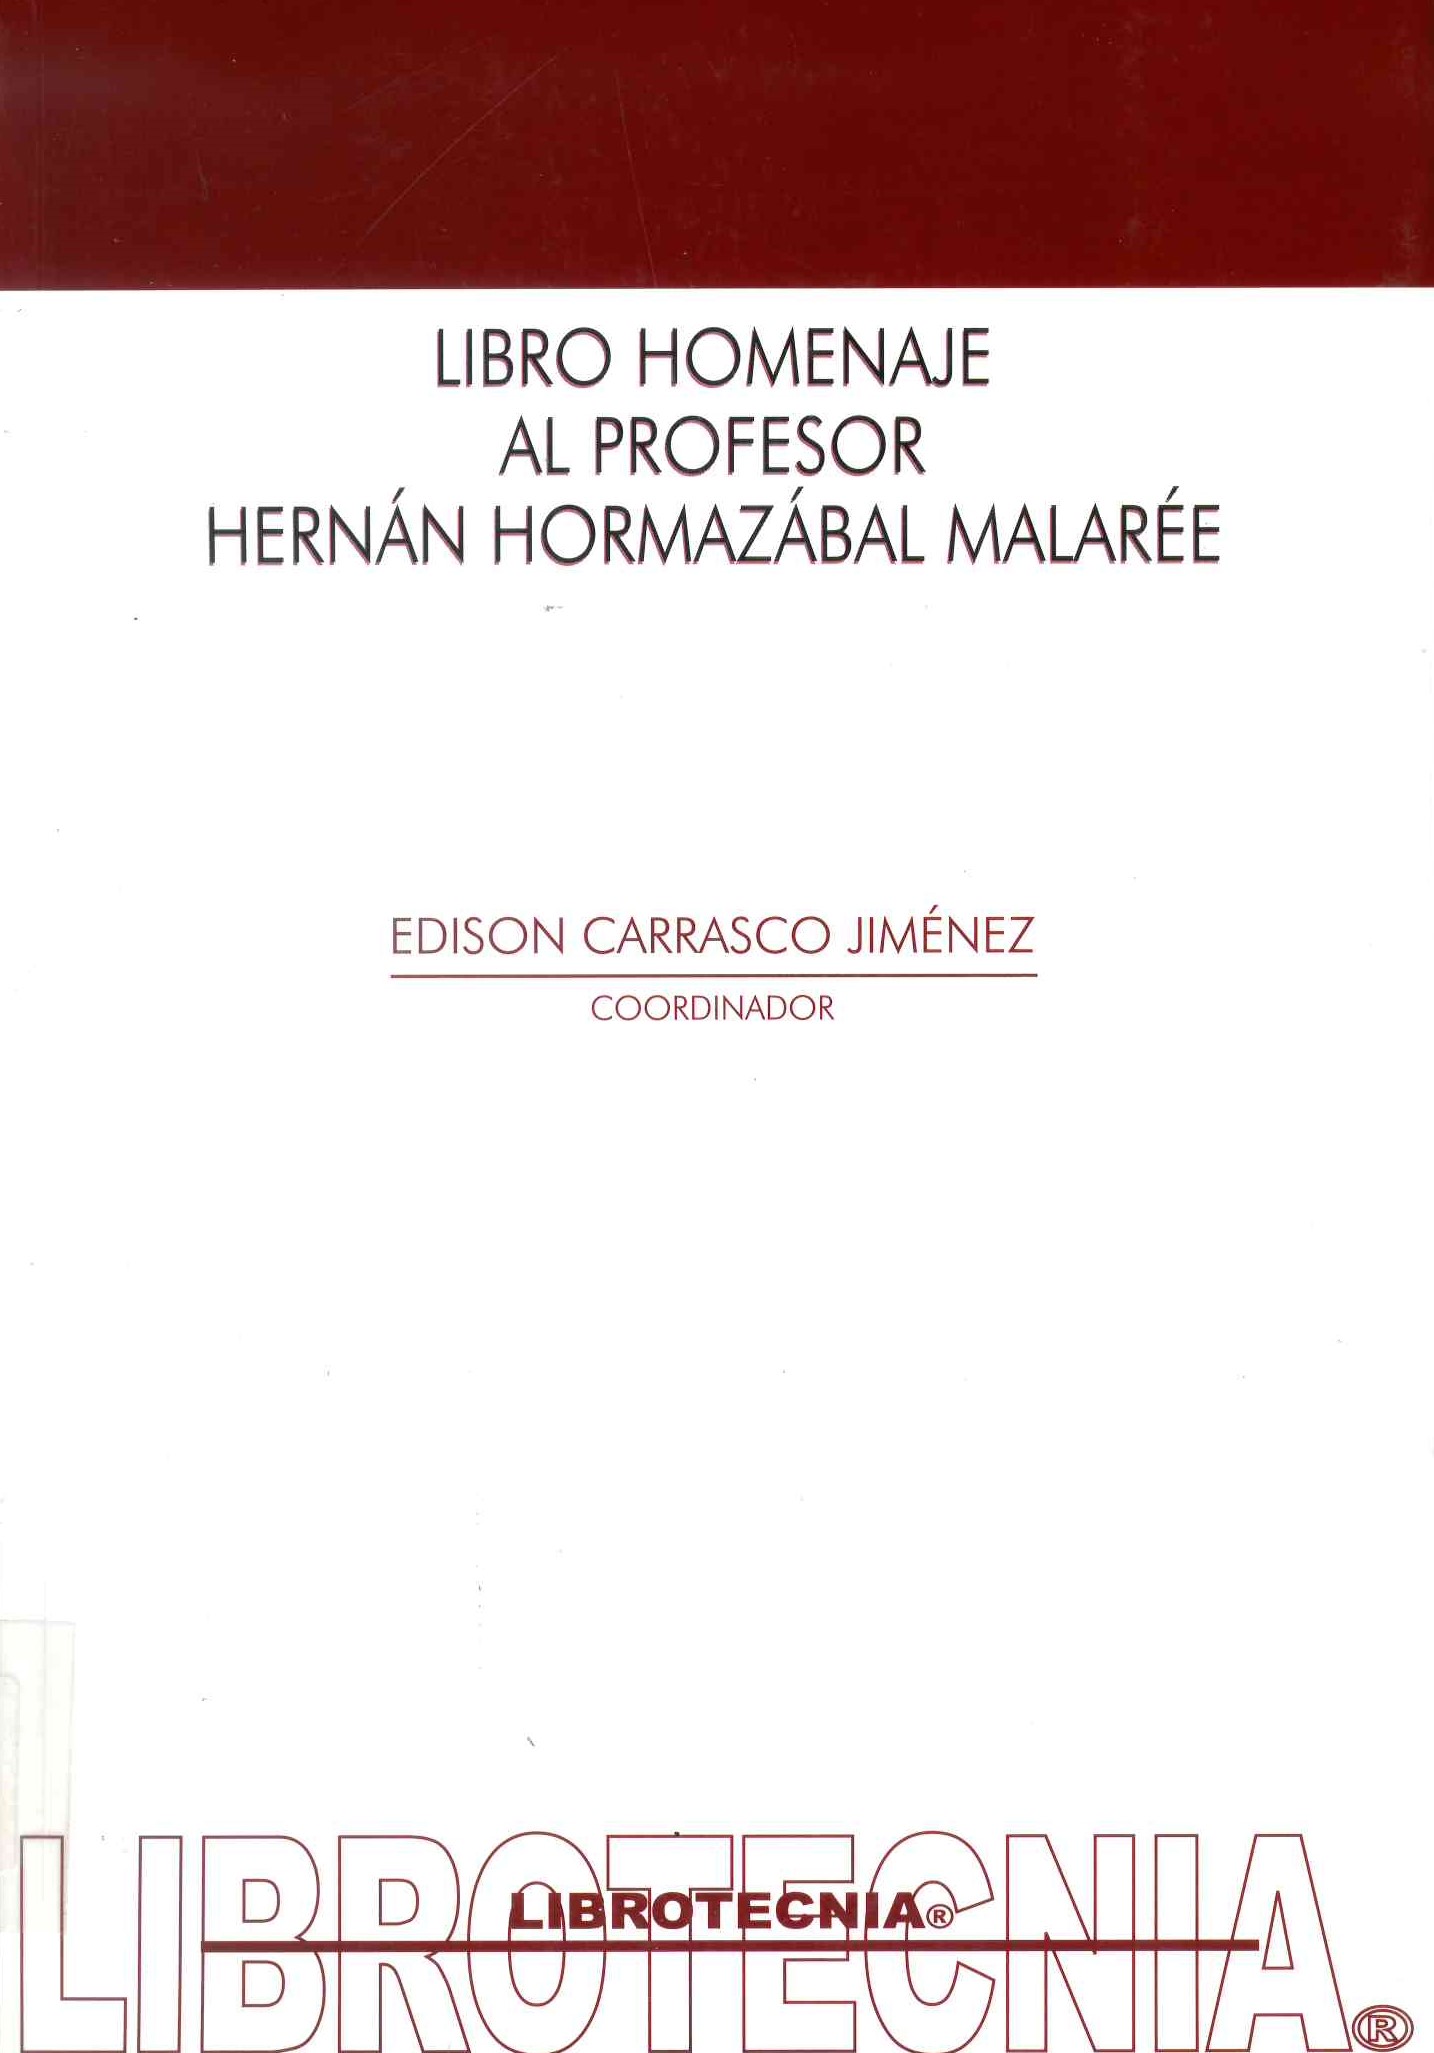 Libro homenaje al profesor Hernán Hormazábal Malarée